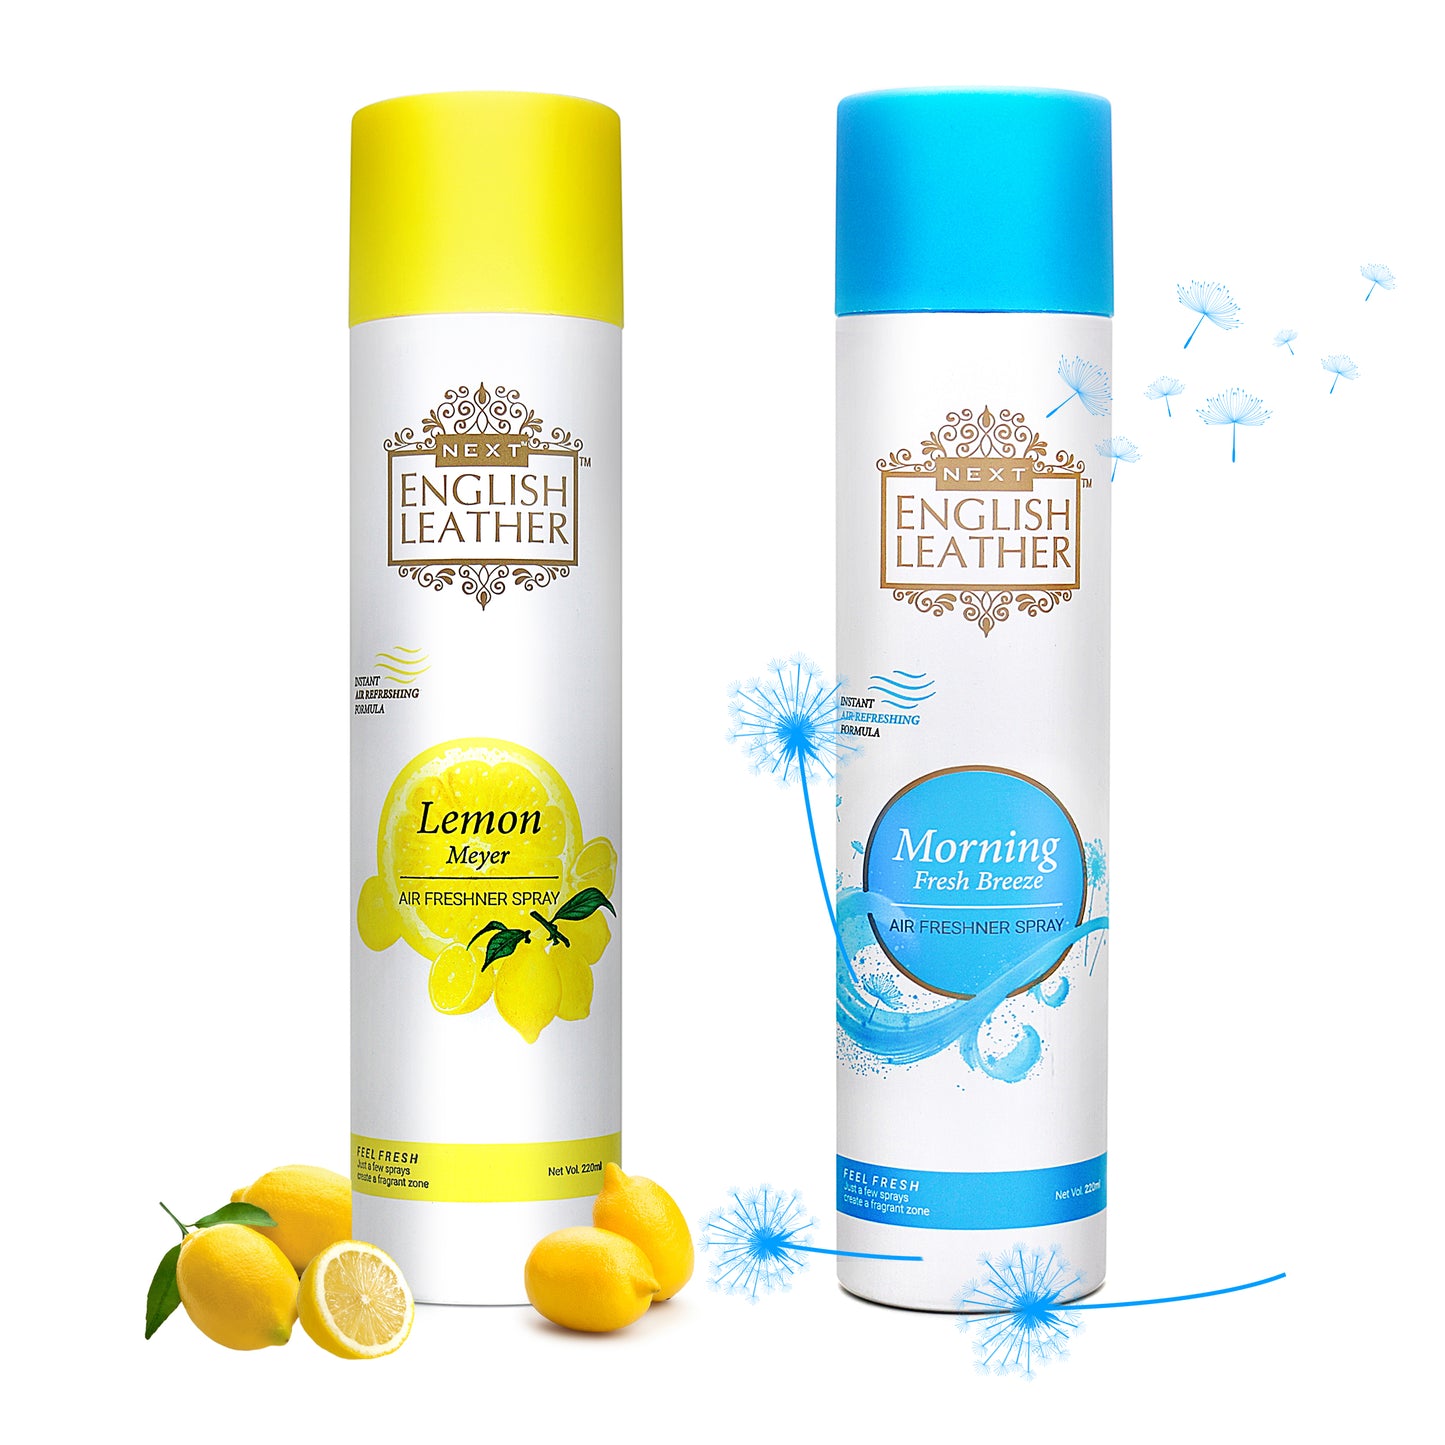 NEXT English Leather  Fresh Breeze and Lemon Meyer Air Freshener Spray - 220ml Each